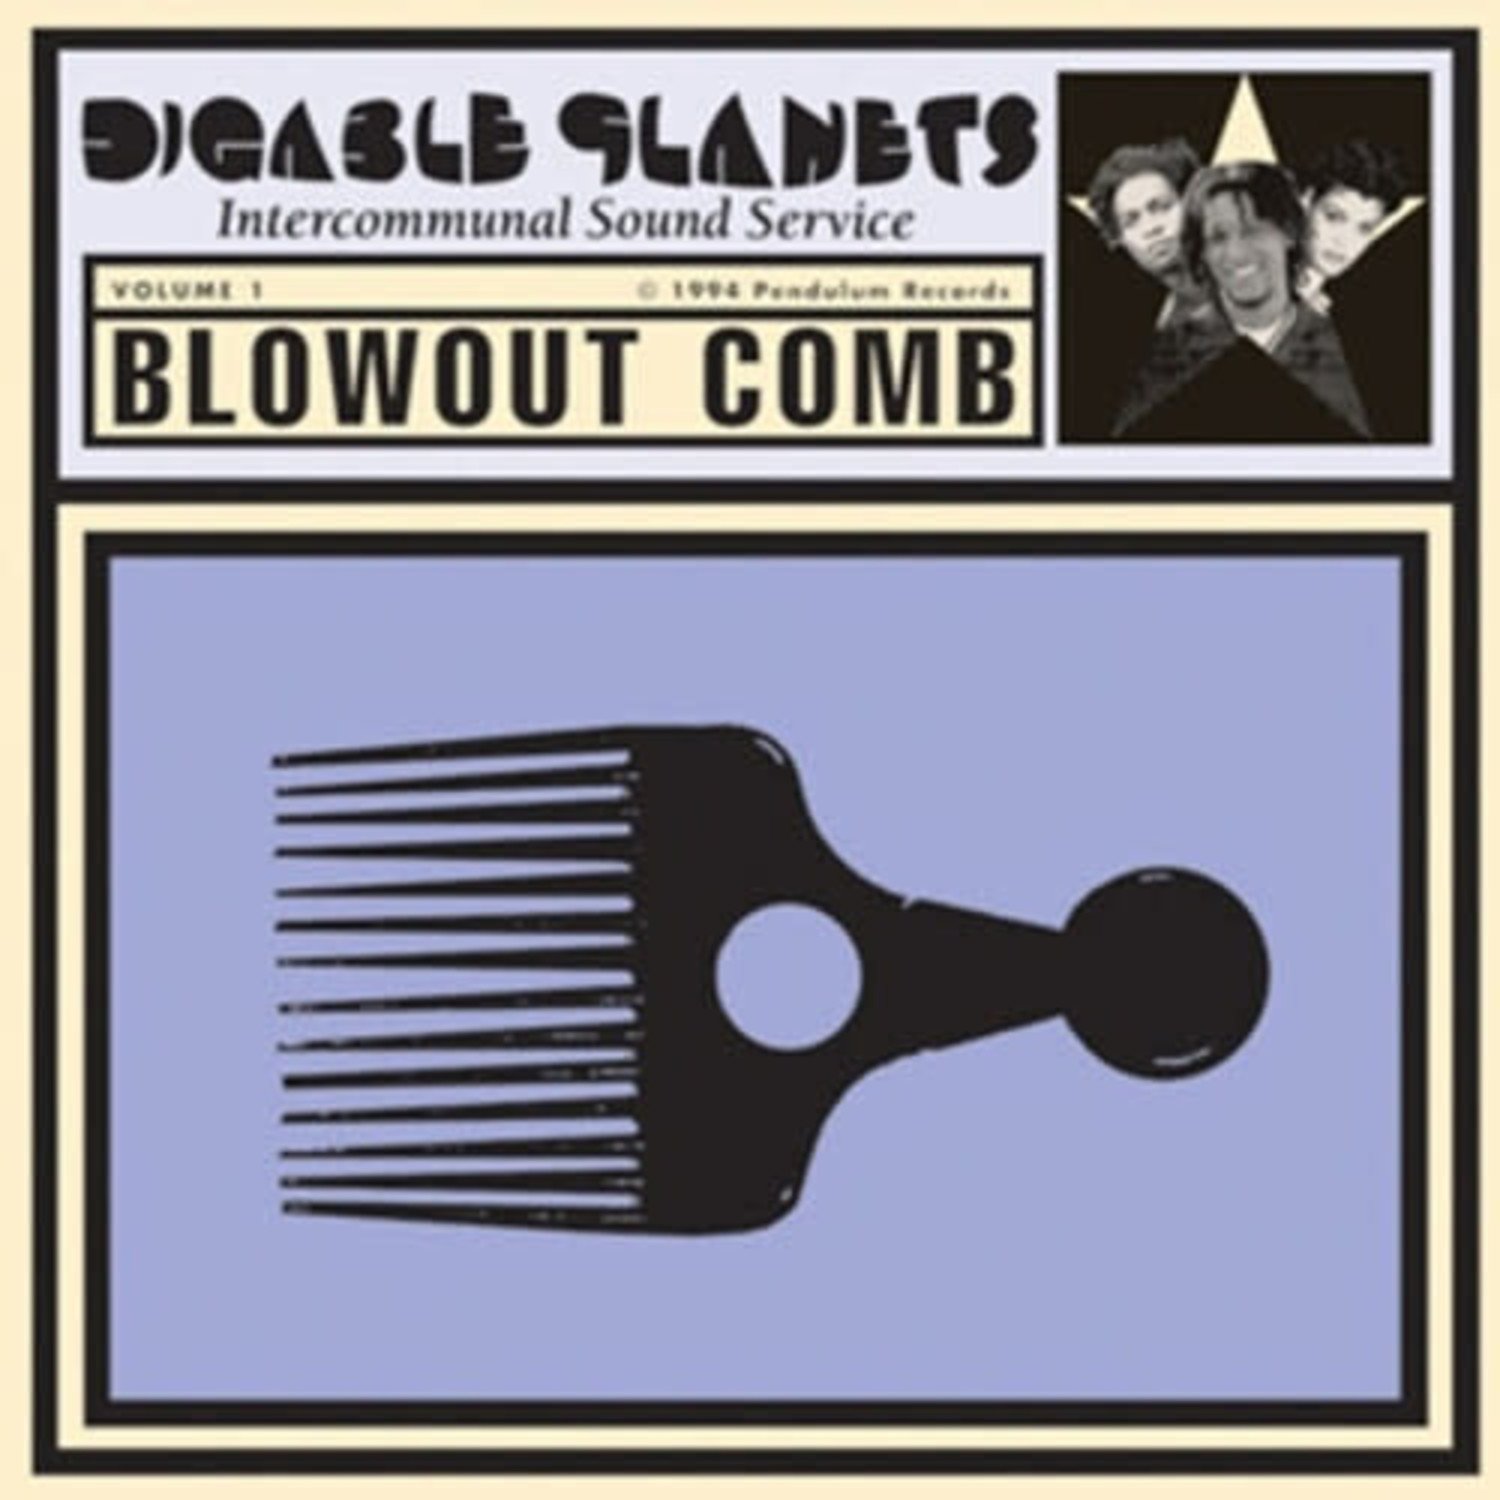 Digable Planets - Blowout Comb 2LP (clear/purple vinyl) - Wax Trax 